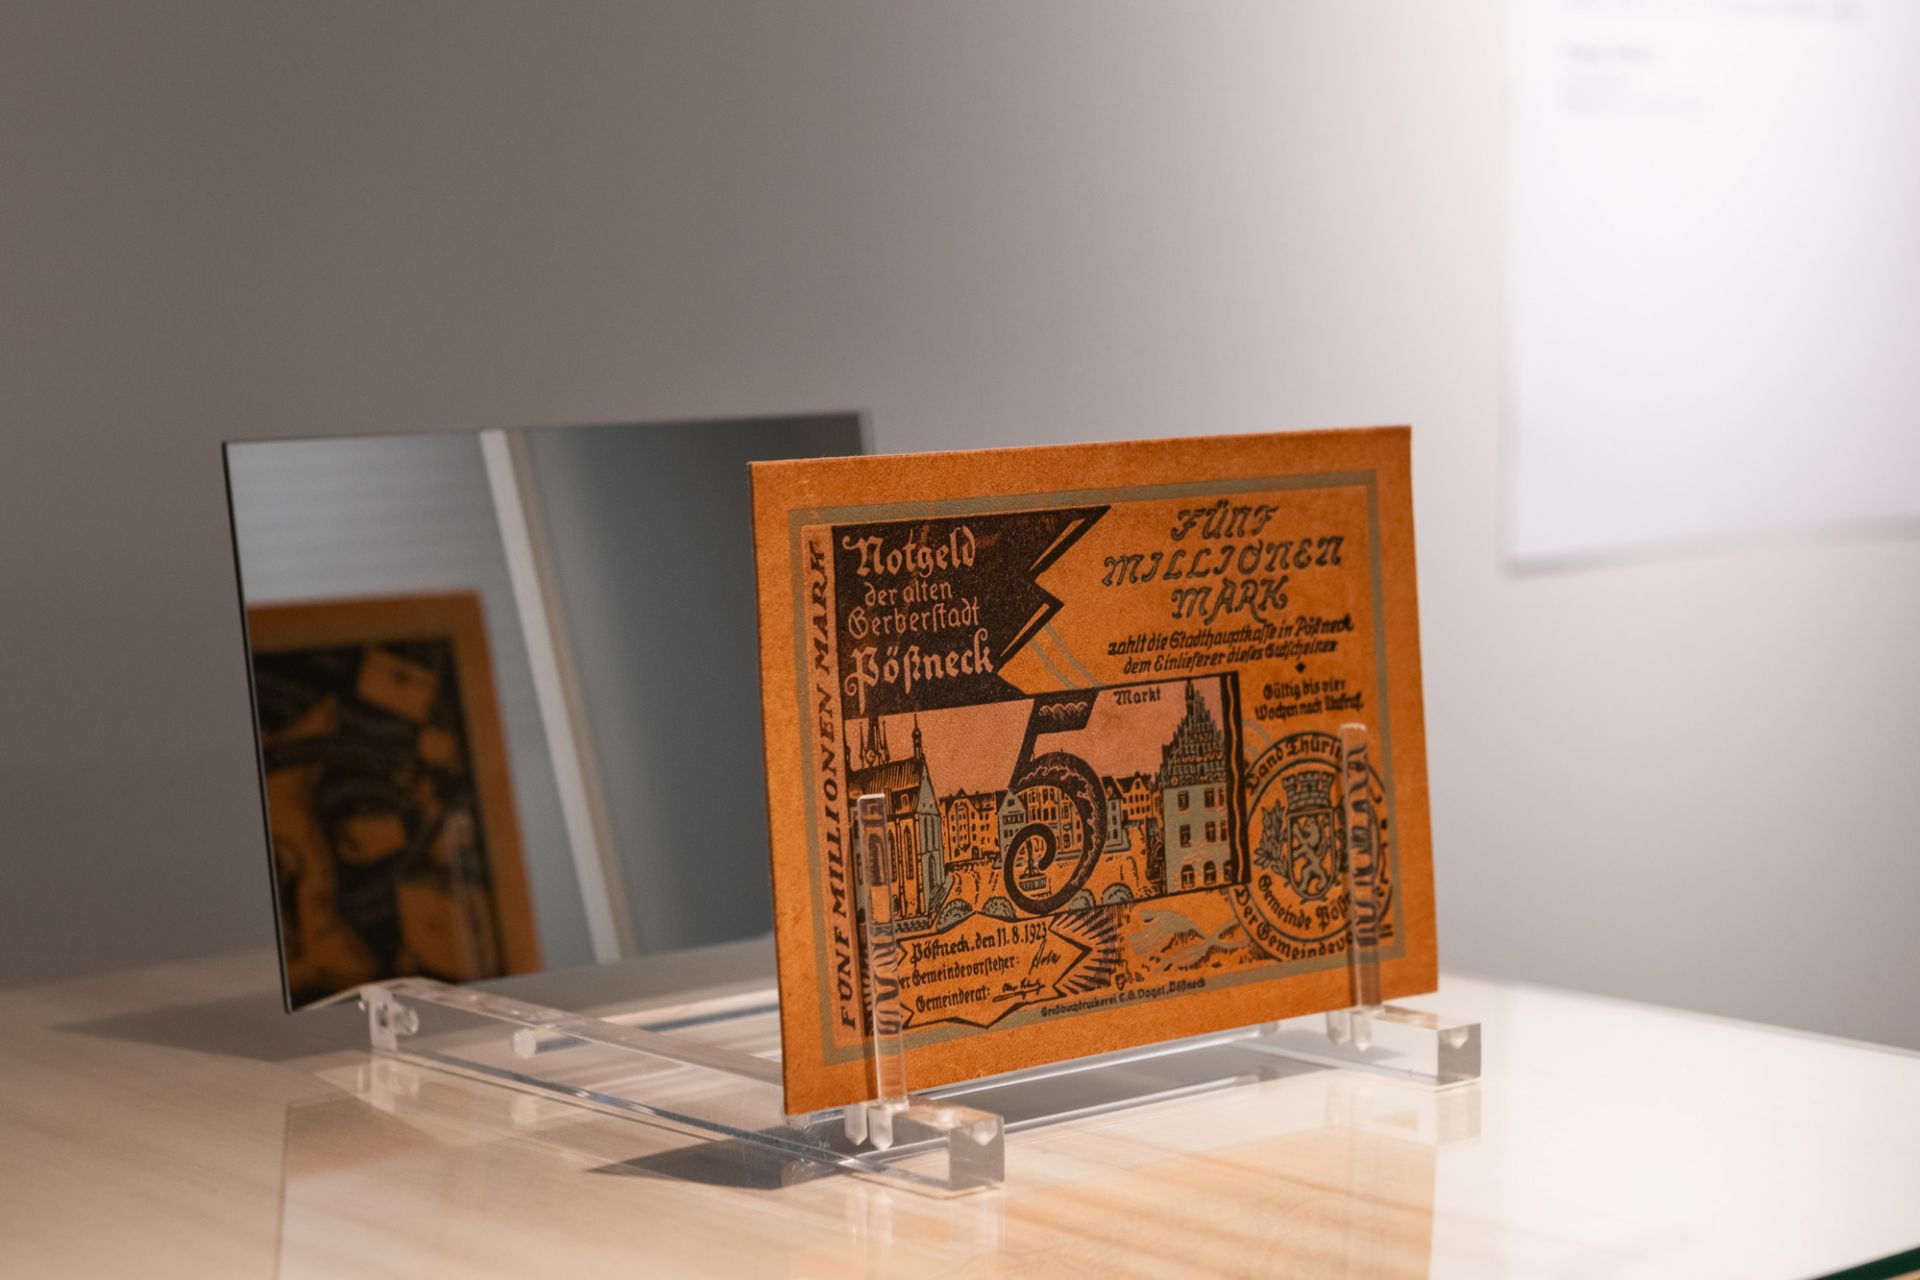 View of the exhibition, chapter INVITEES, Emergency money, 5 million marks, graphic artist Kühlborn for the C. G. Vogel large-format printing works, Pößneck, 1923